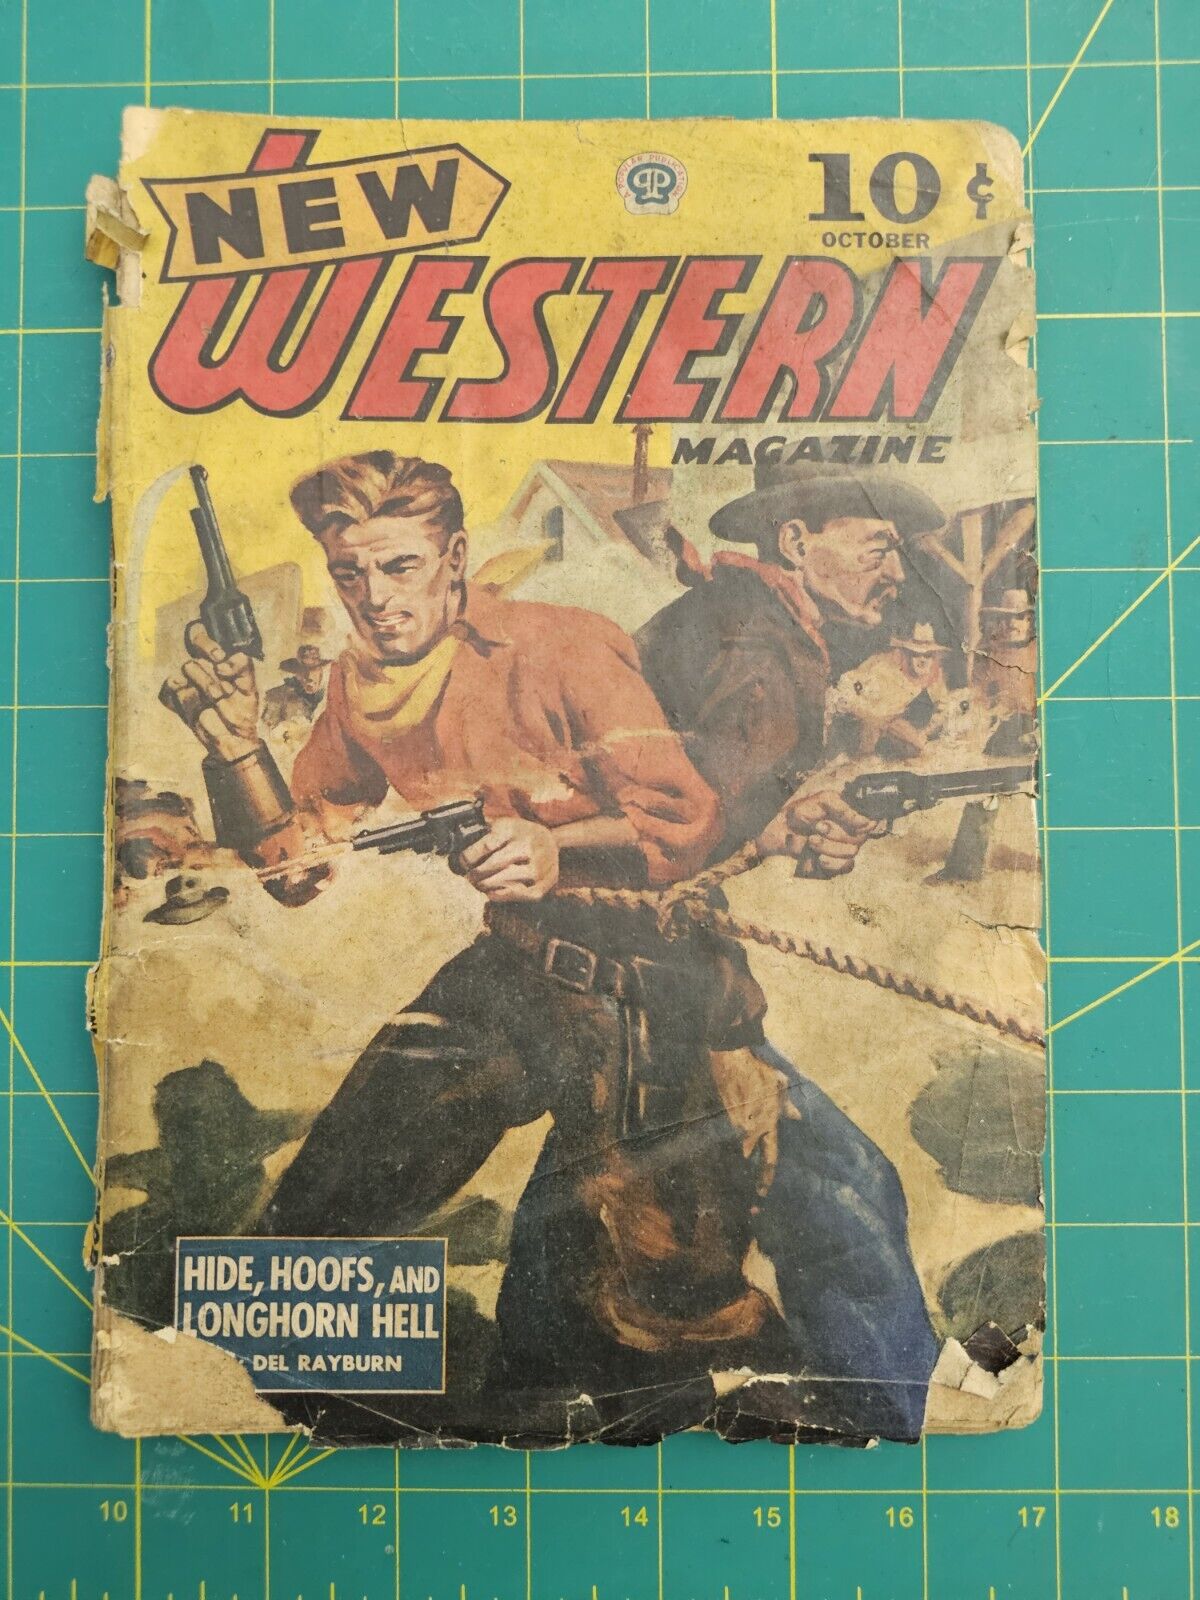 New Western Magazine 1944, #18 Vol. 6, 10c